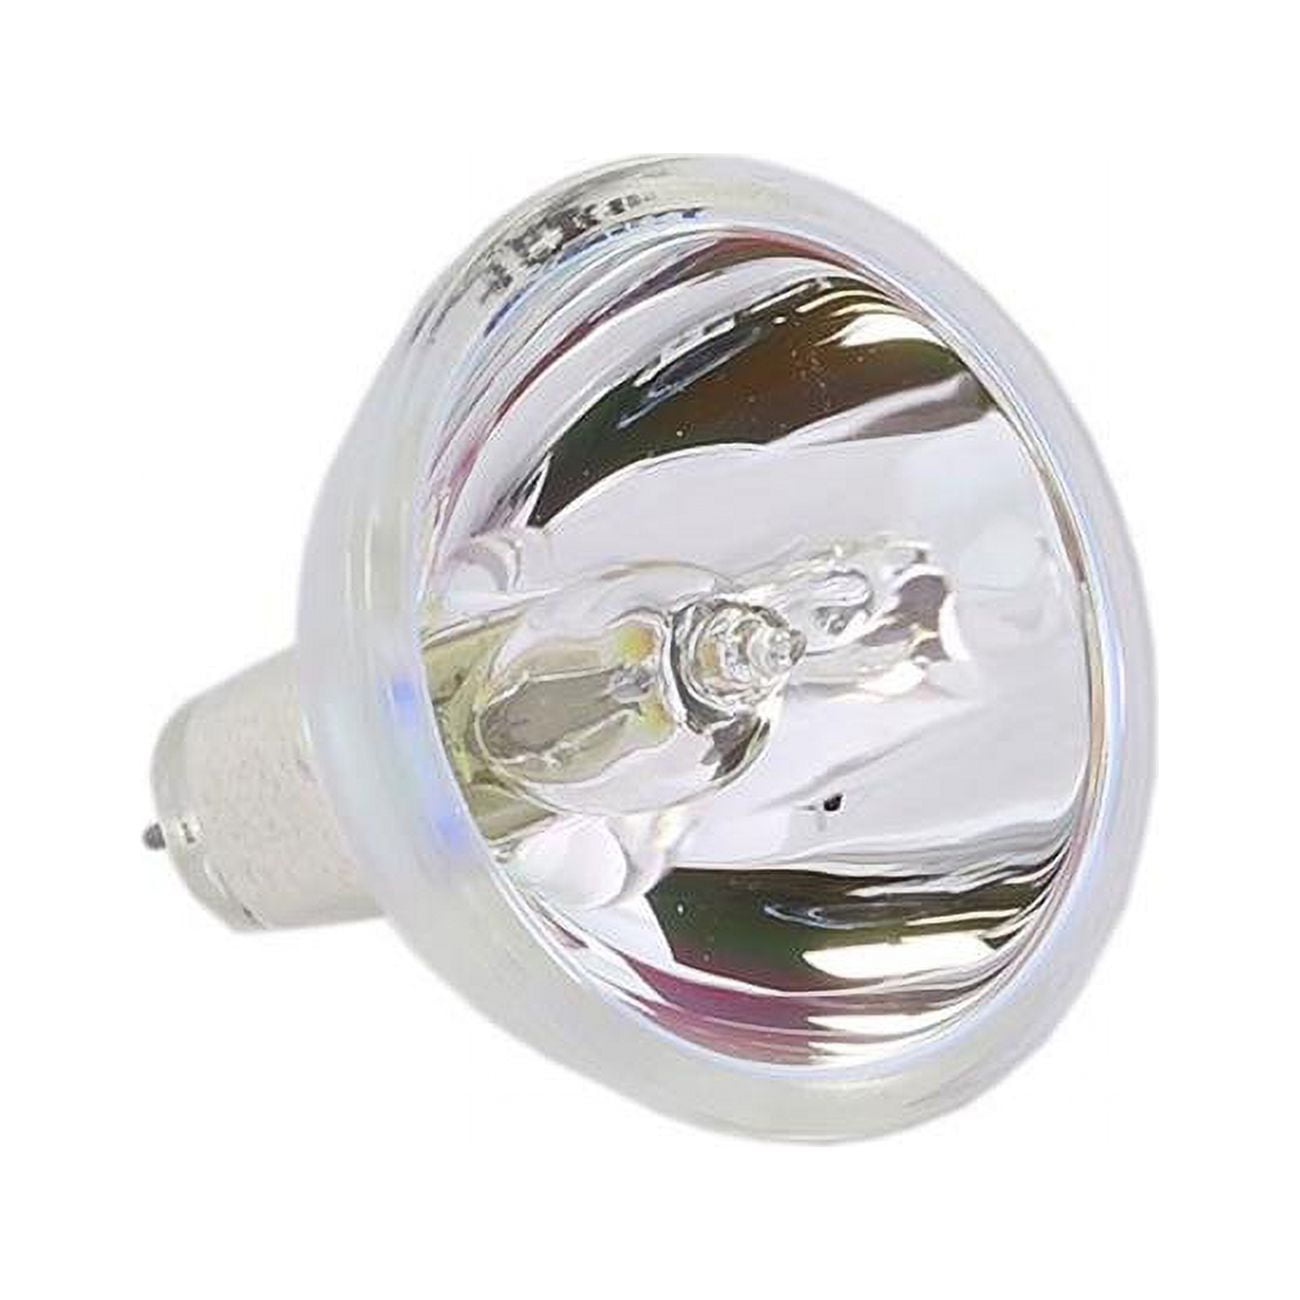 Dny-170197 Halogen Reflector 13298 52w Gz4 10v Light Bulb